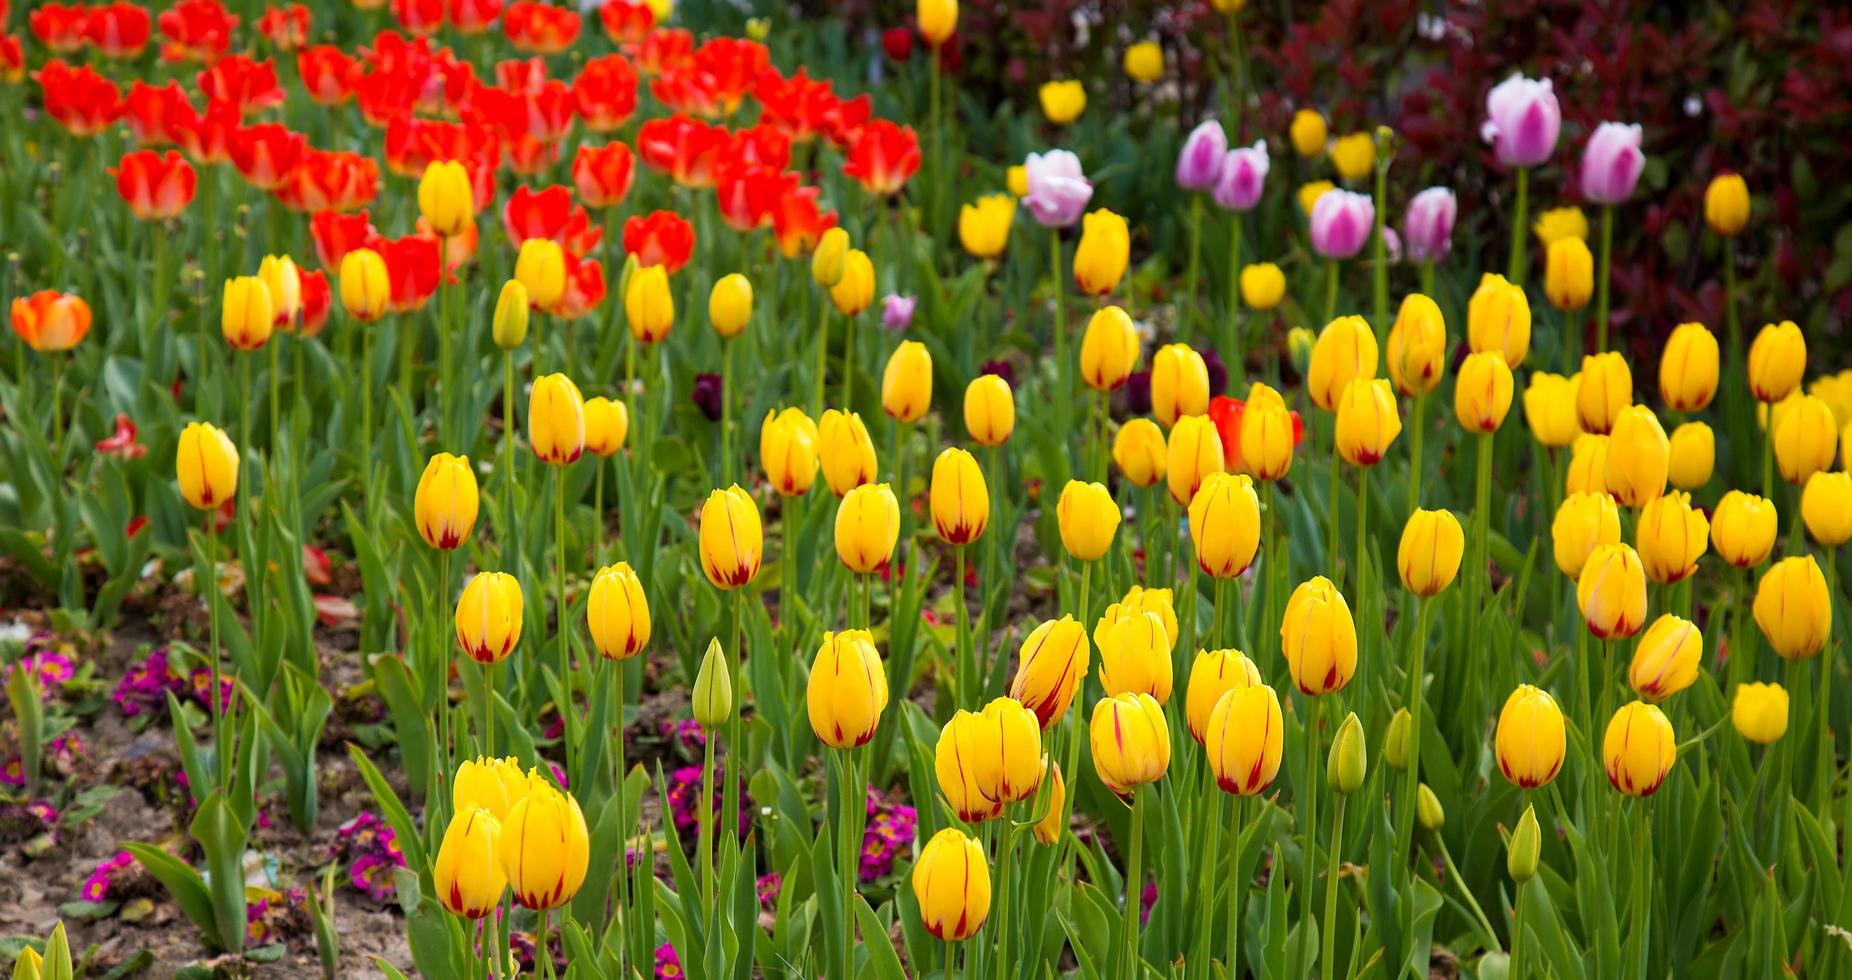 blumige frühlingsblume bunte tulpen foto